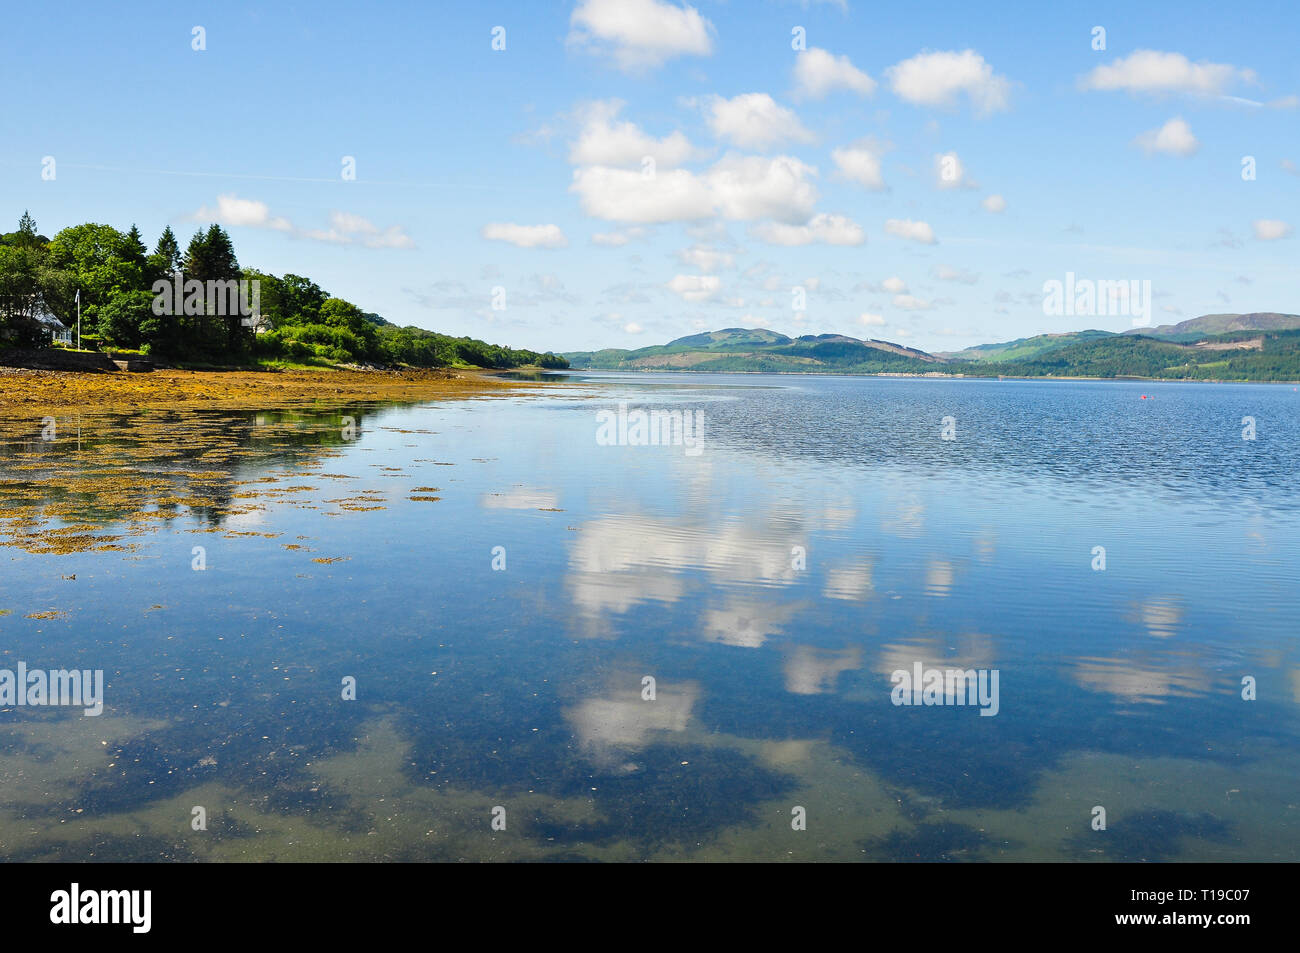 Loch Lomond, Scotland Stock Photo - Alamy